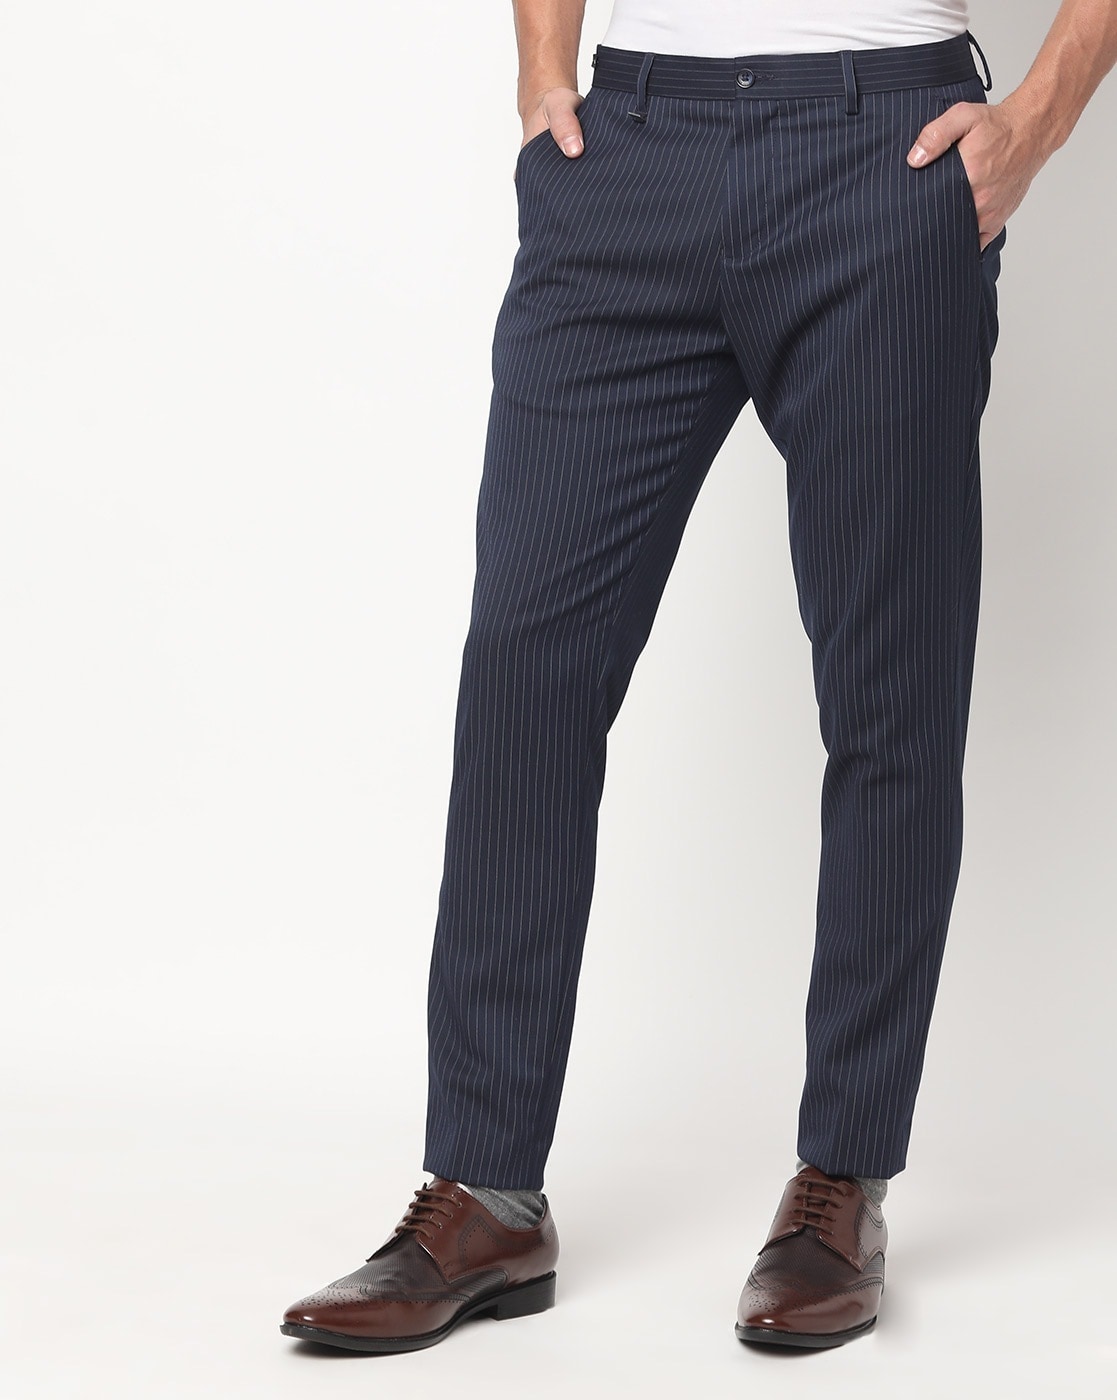 Men's Blue Cotton Striped Formal Trousers at Rs 992.00 | Trousers for men,  पुरुषों की पतलून - NOZ2TOZ, New Delhi | ID: 2851929728155